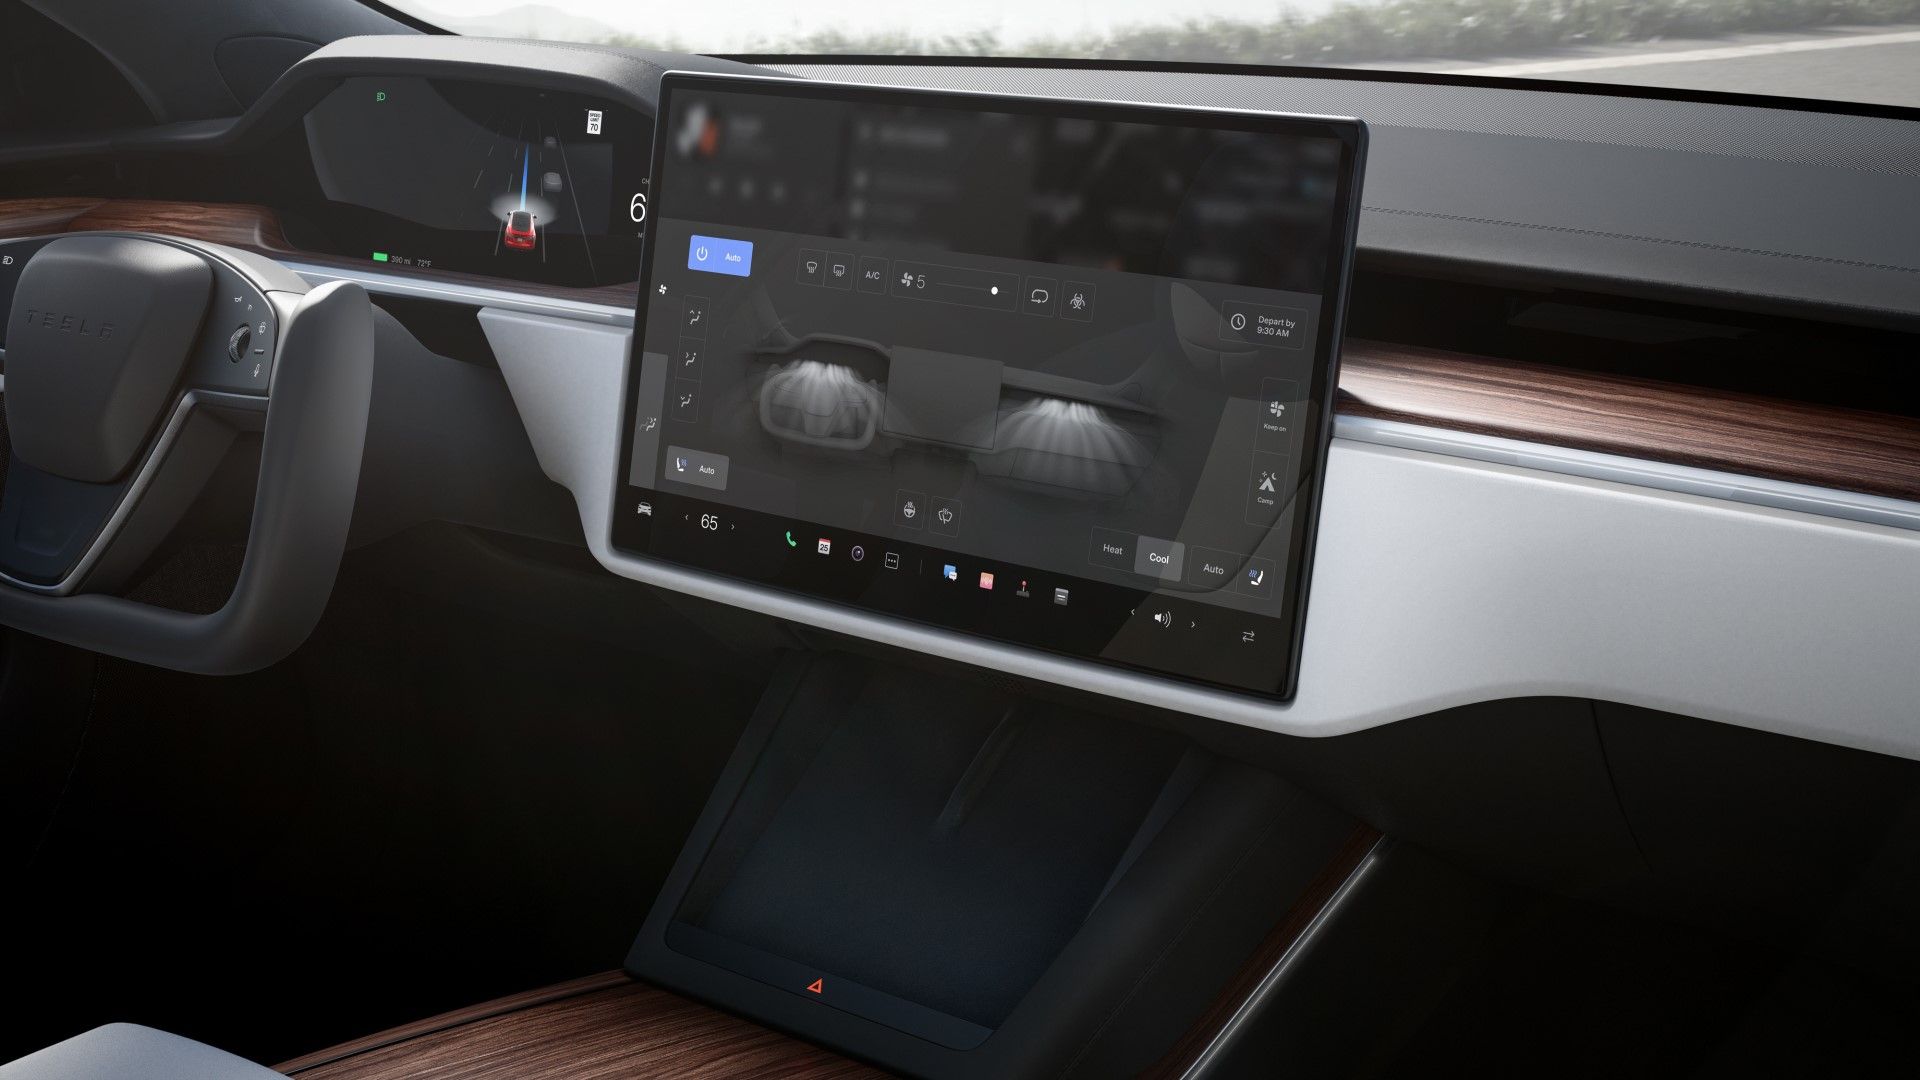 Tesla Model S infotainment screen